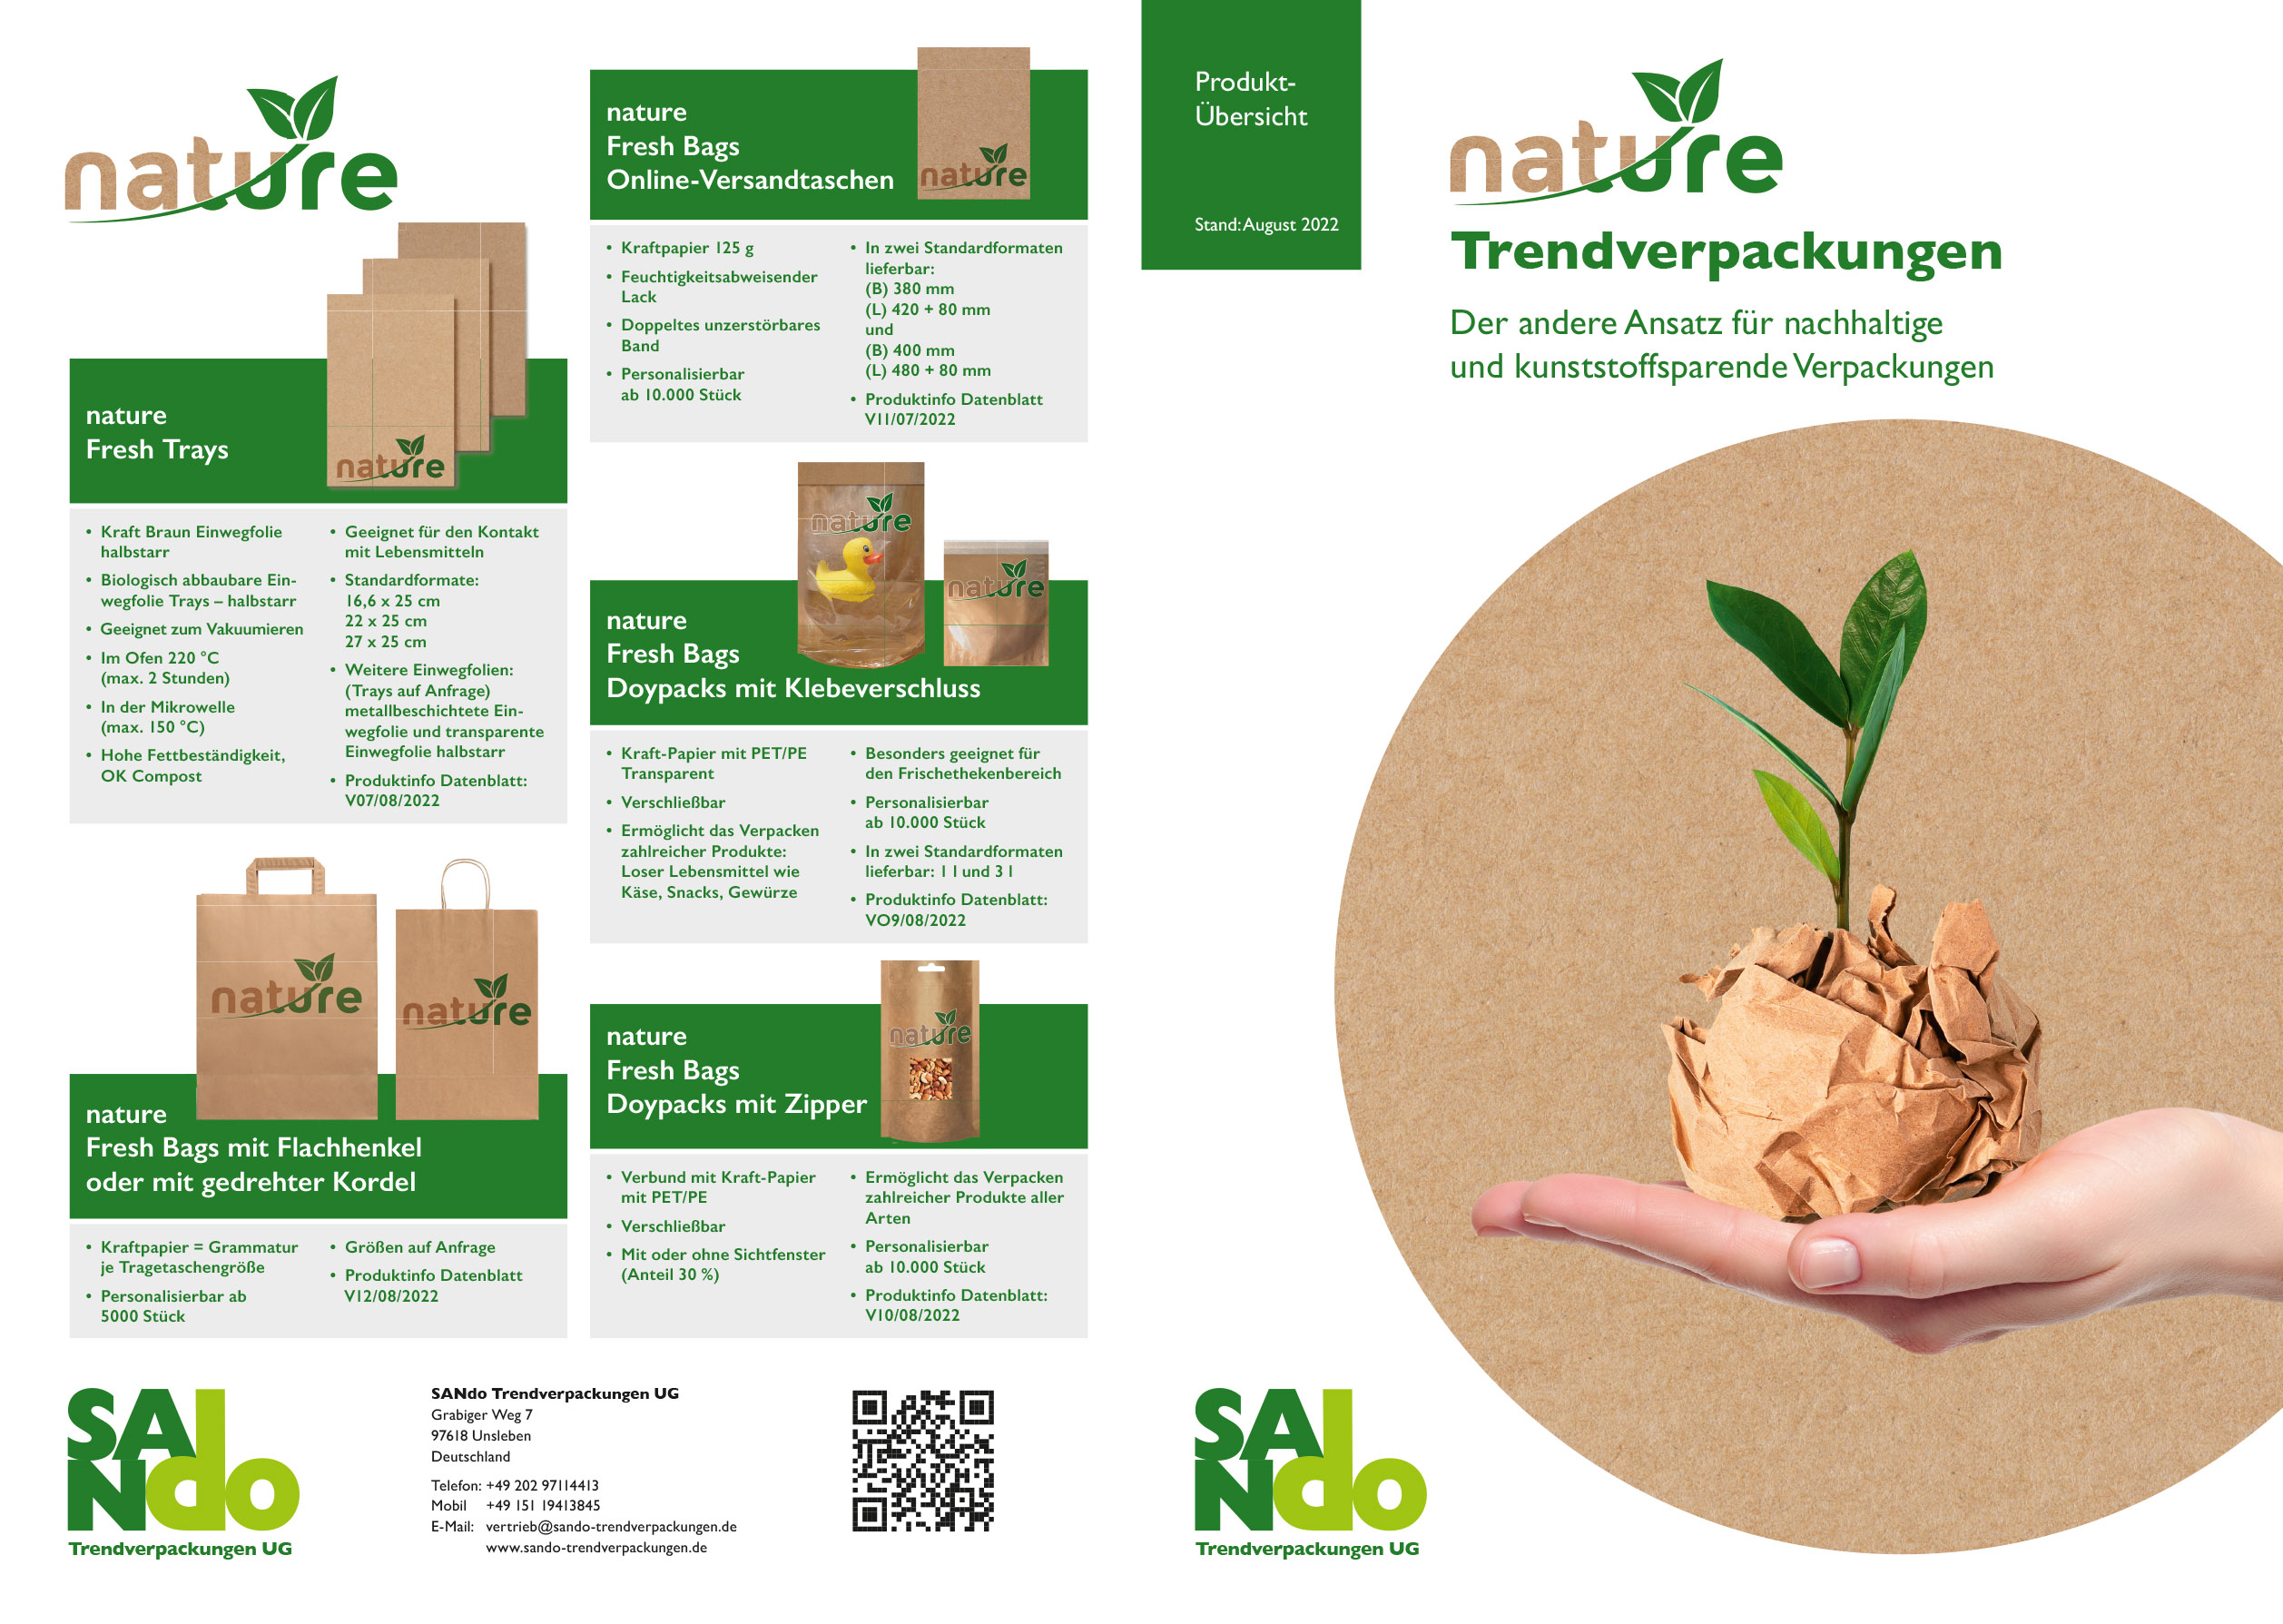 SANdo Folder Nature Fresh Bags 08 2022 1